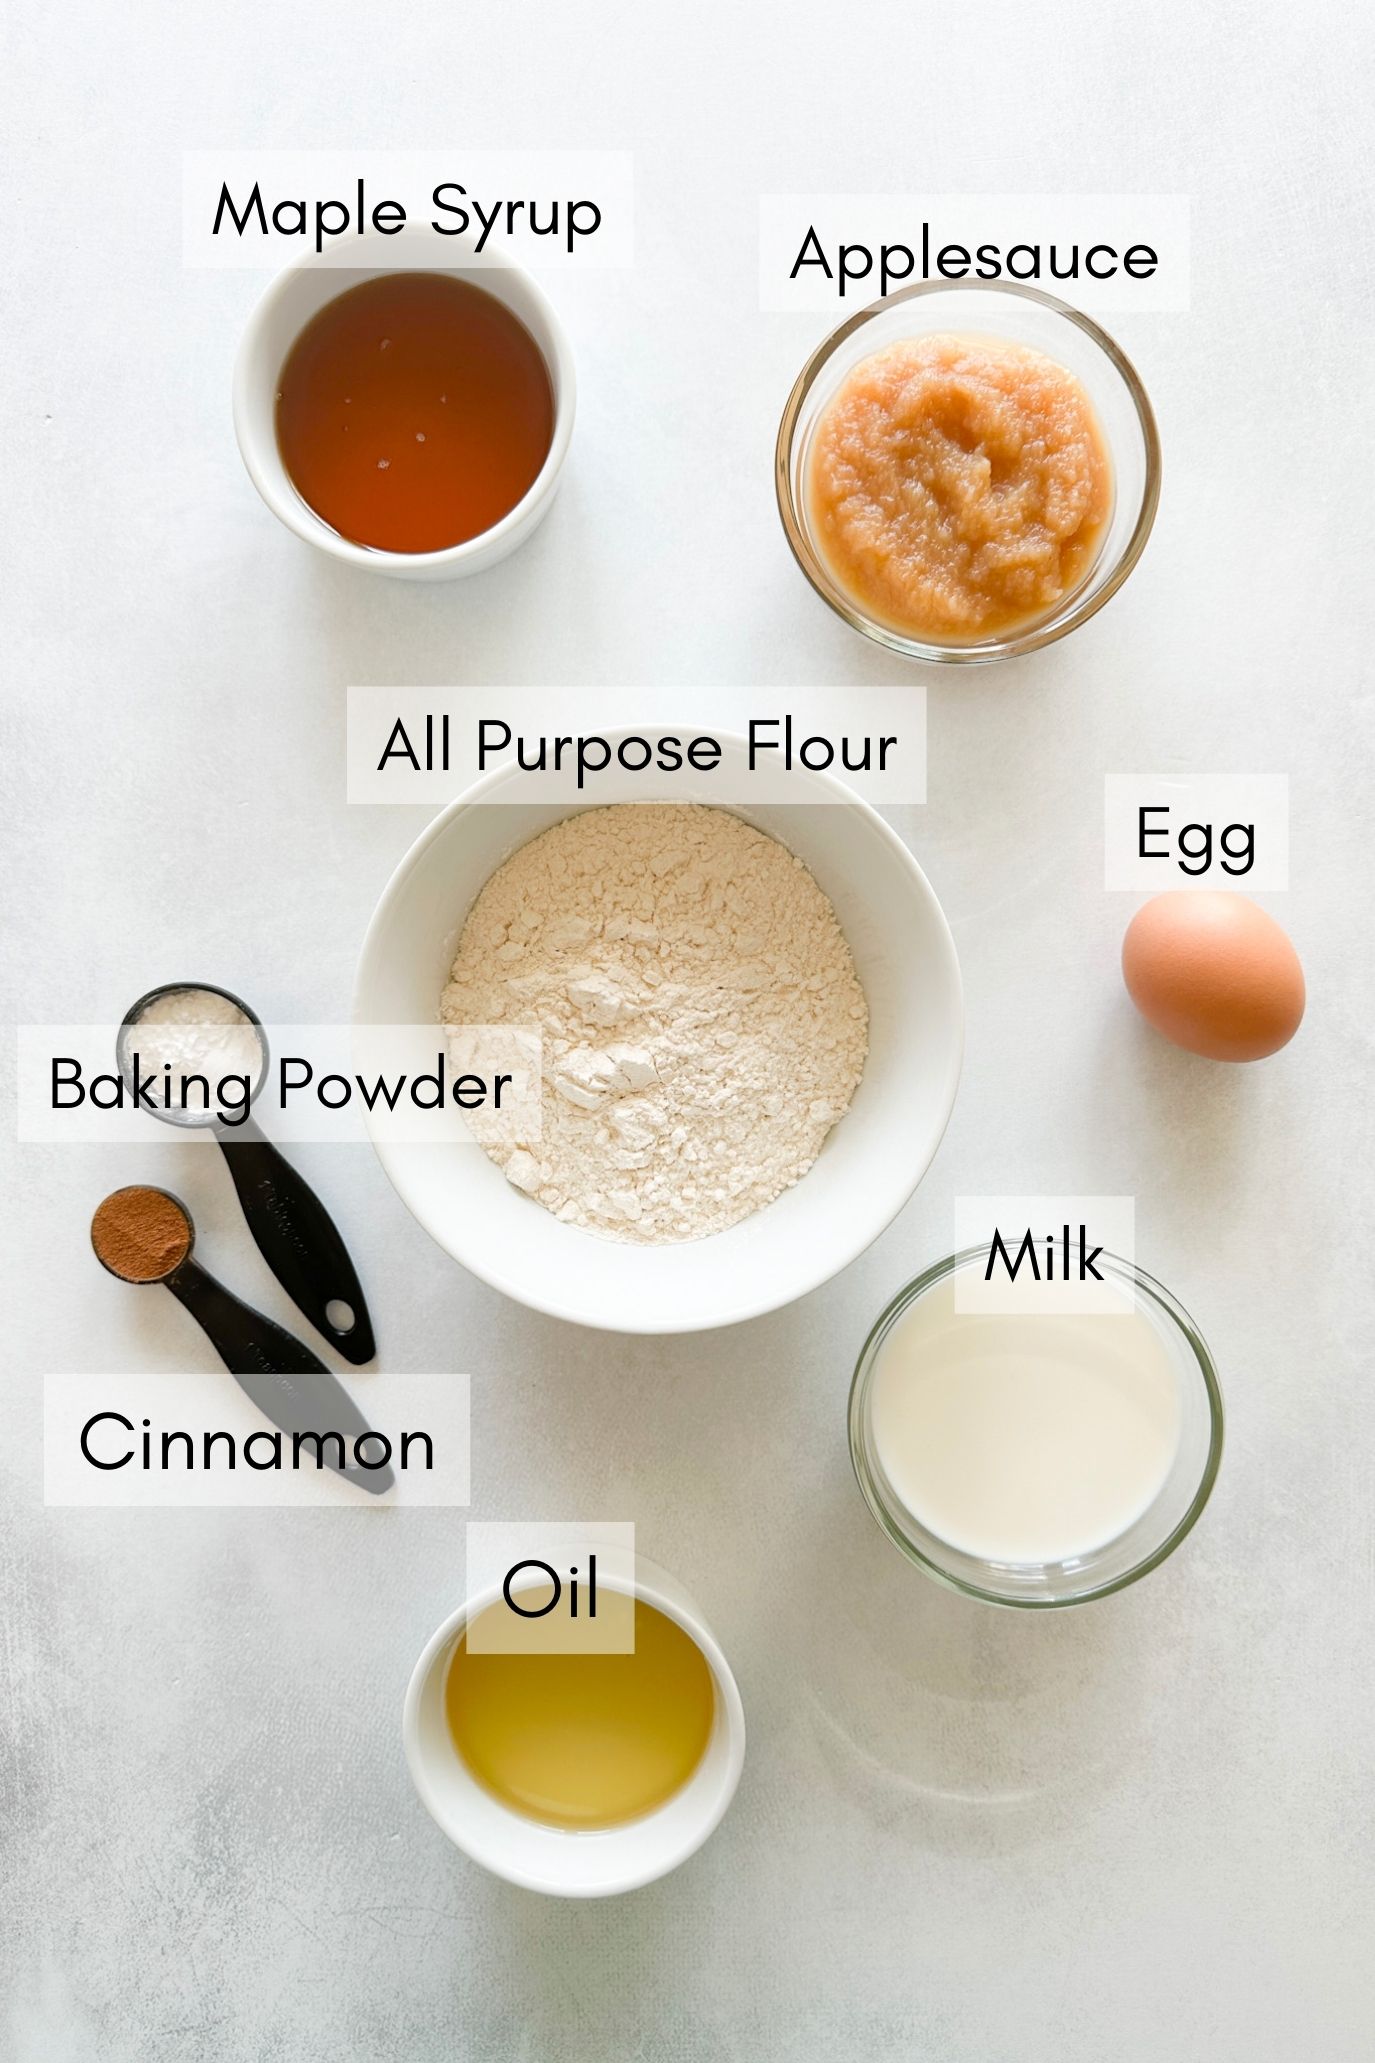 Ingredients to make cinnamon muffins.